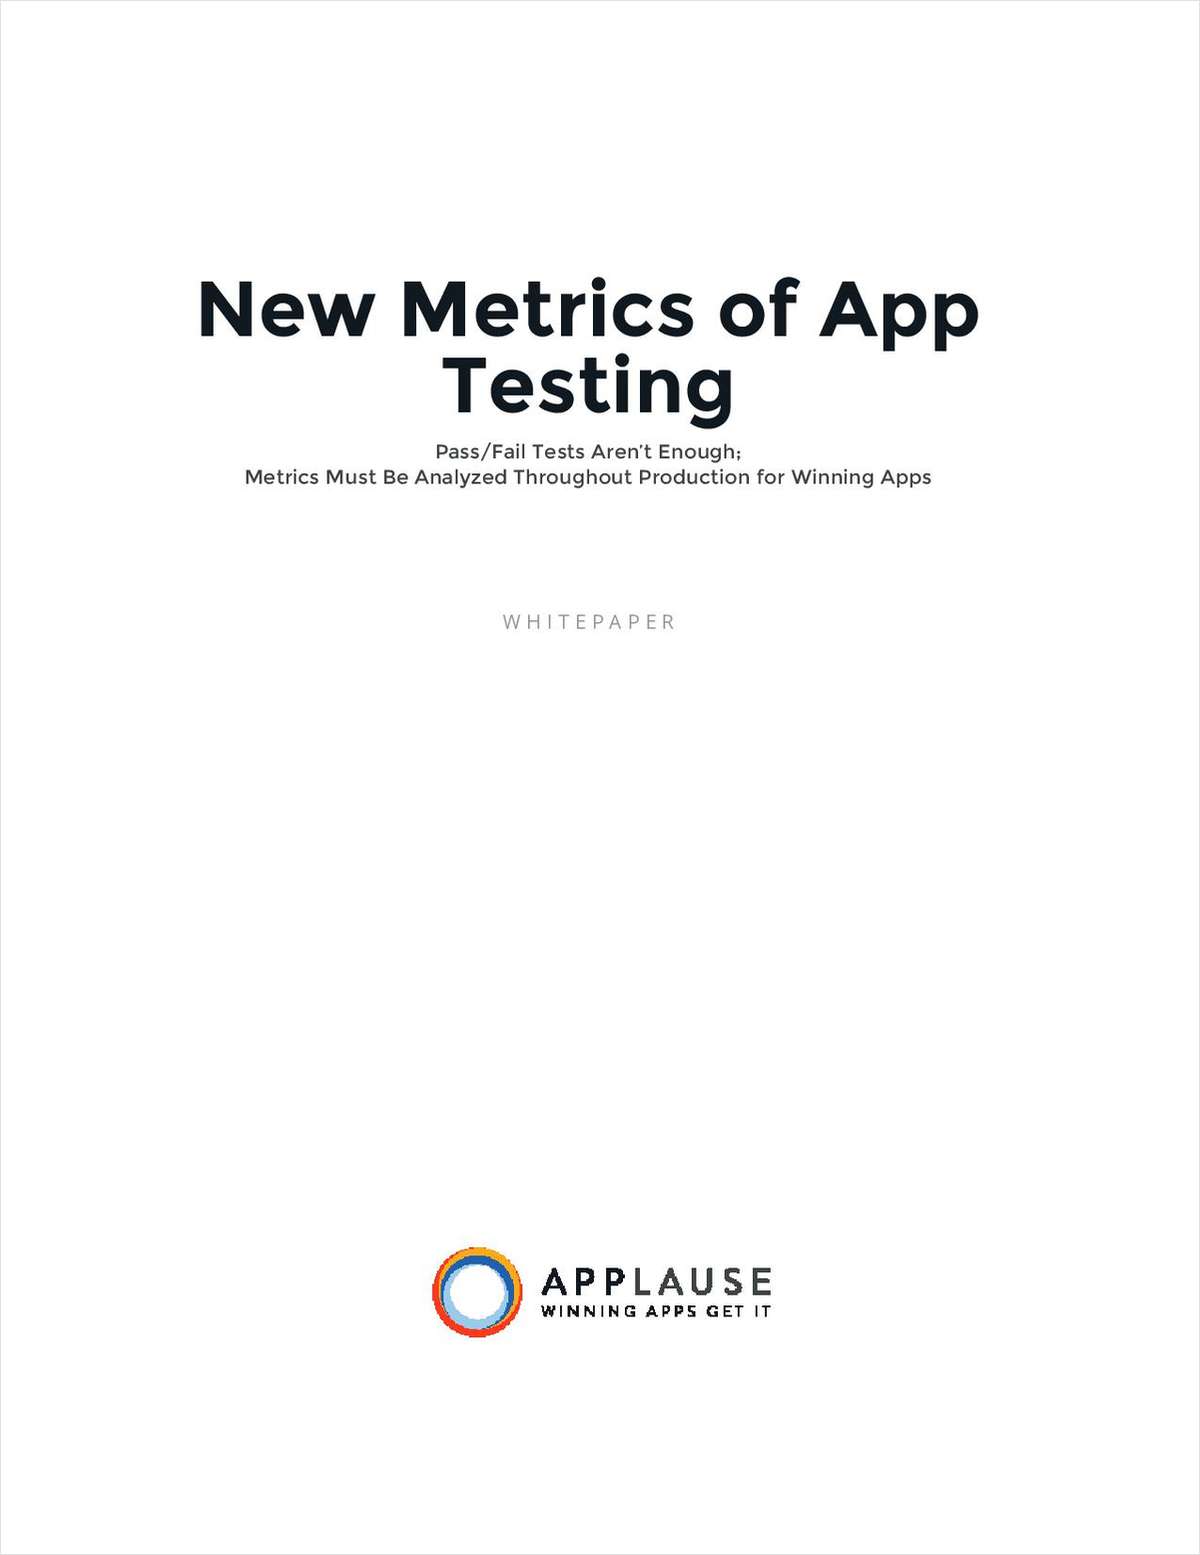 The New Metrics of App Testing